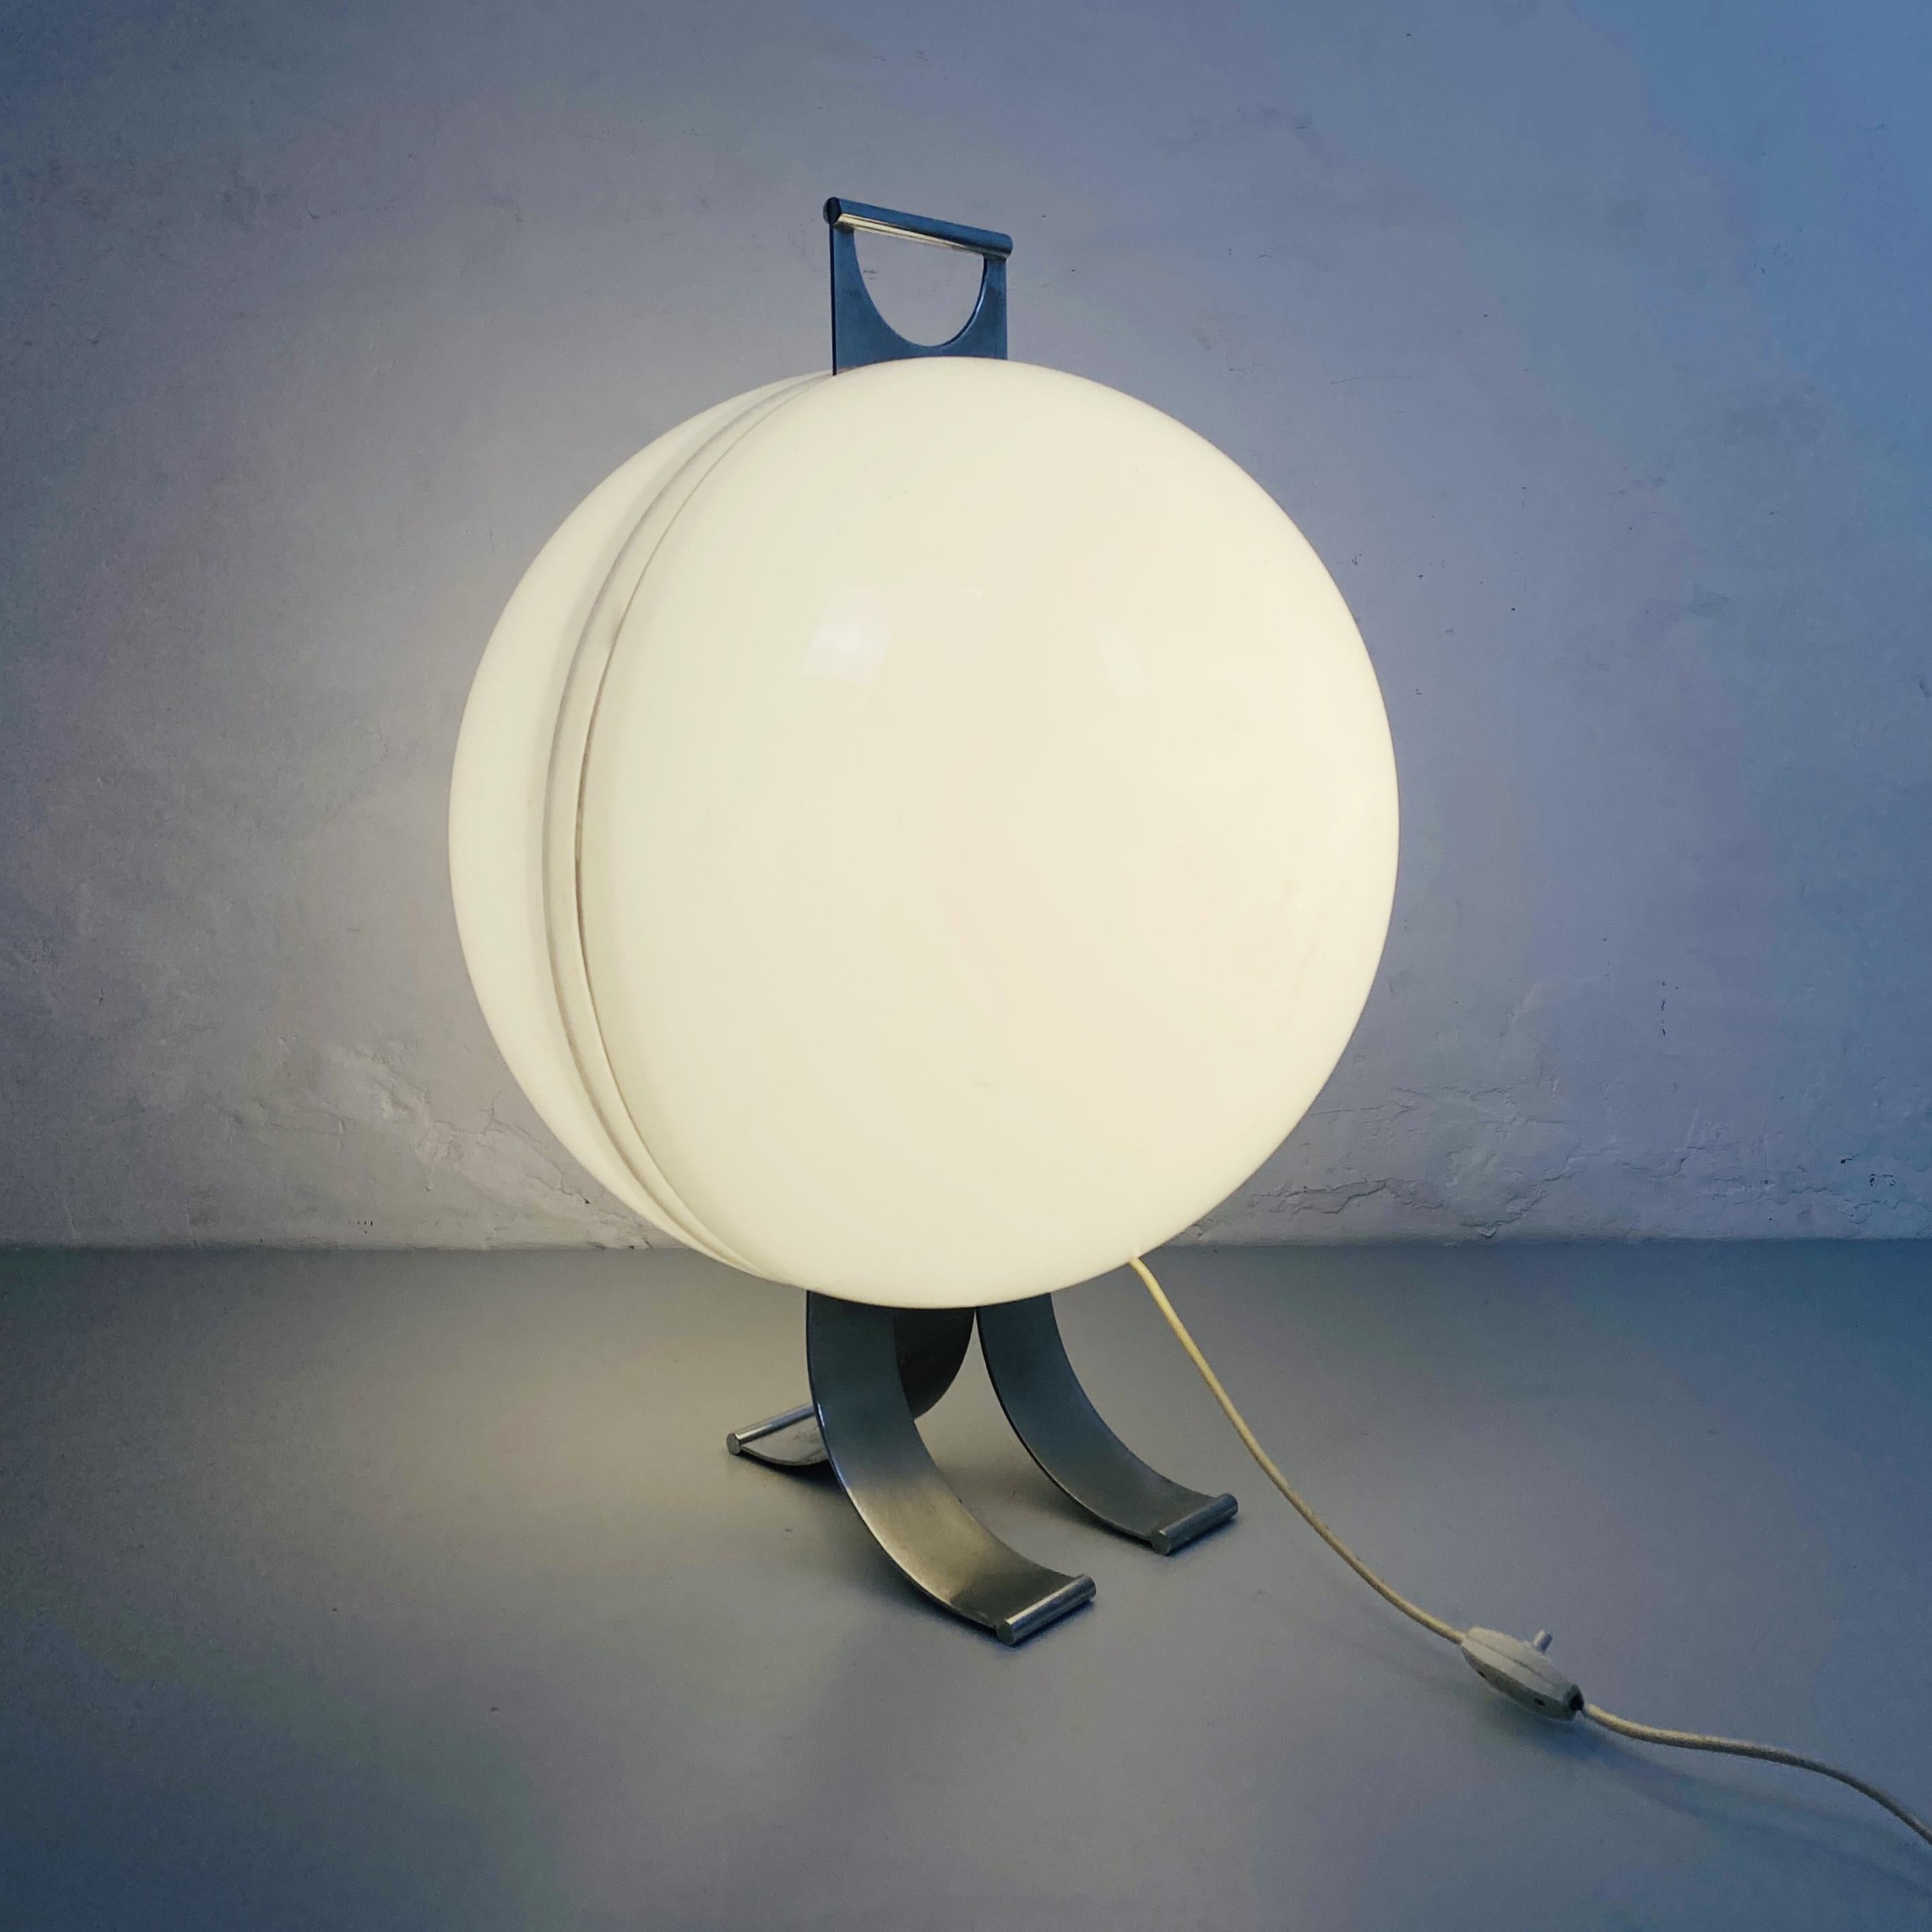 Italian Mid-Century Modern Sfera Table Lamp by Beni Cuccuru for Ecolight, 1972 For Sale 1